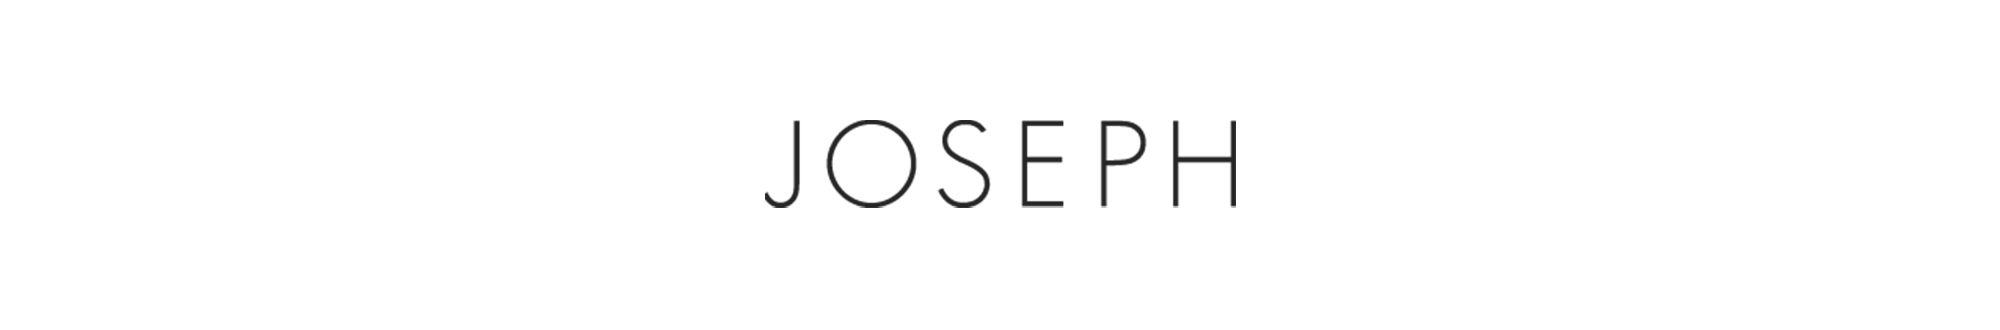 Joseph Logo - JOSEPH FASHION MONOCHROME STYLIZATIONHug You